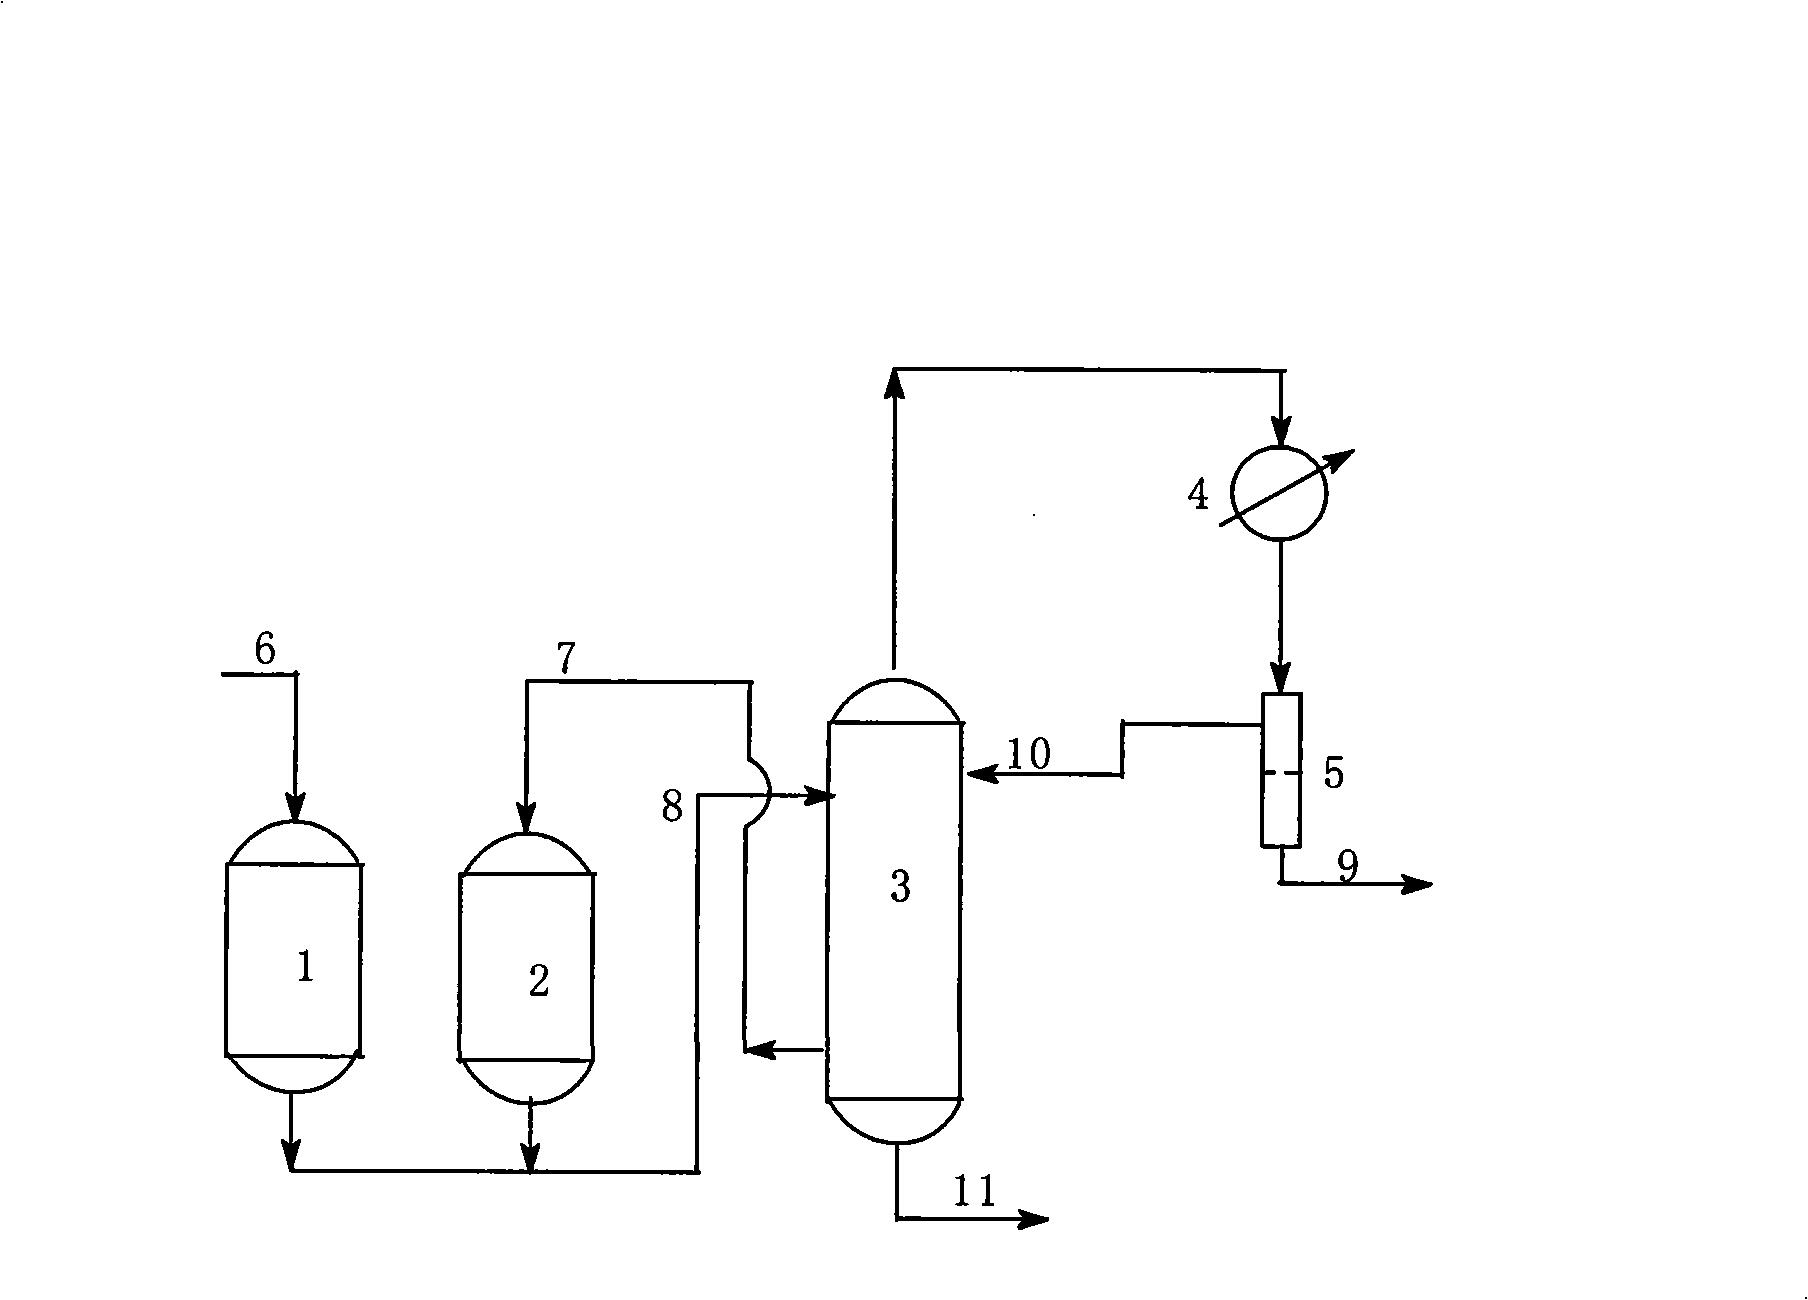 Method for preparing 1-Methoxy-2-propyl acetate by continuous esterification reaction